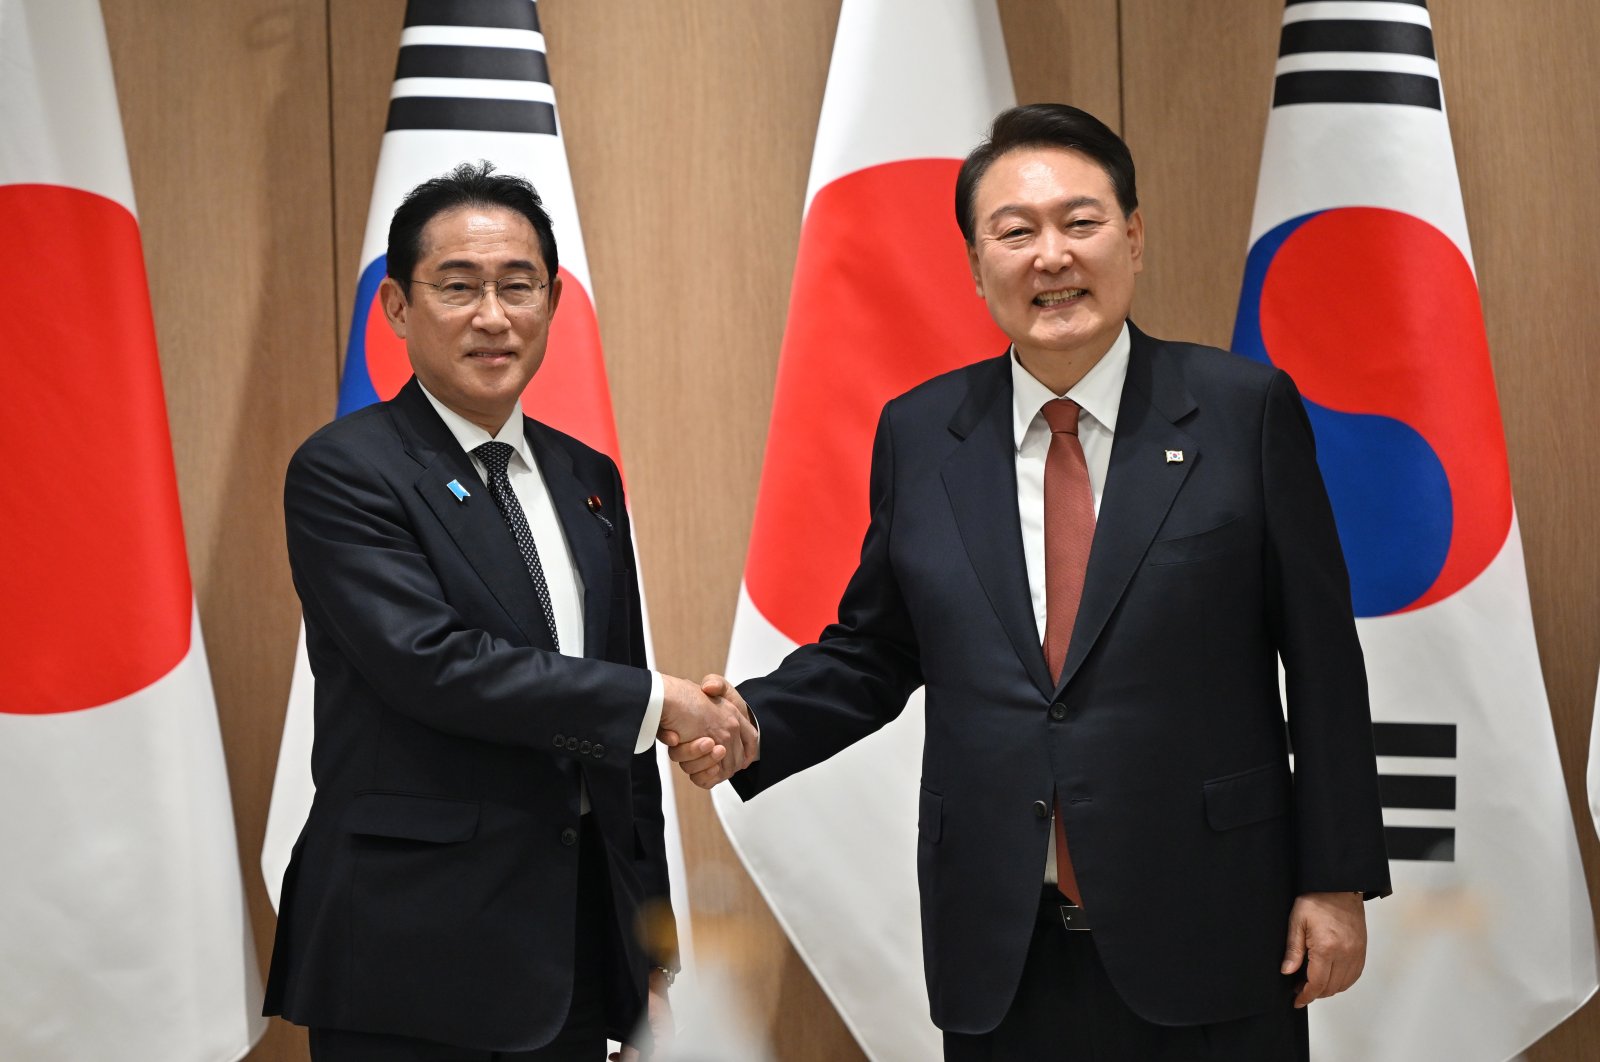 Jepang, Korea Selatan mencari ikatan yang lebih dalam untuk mengatasi masalah regional dan internasional